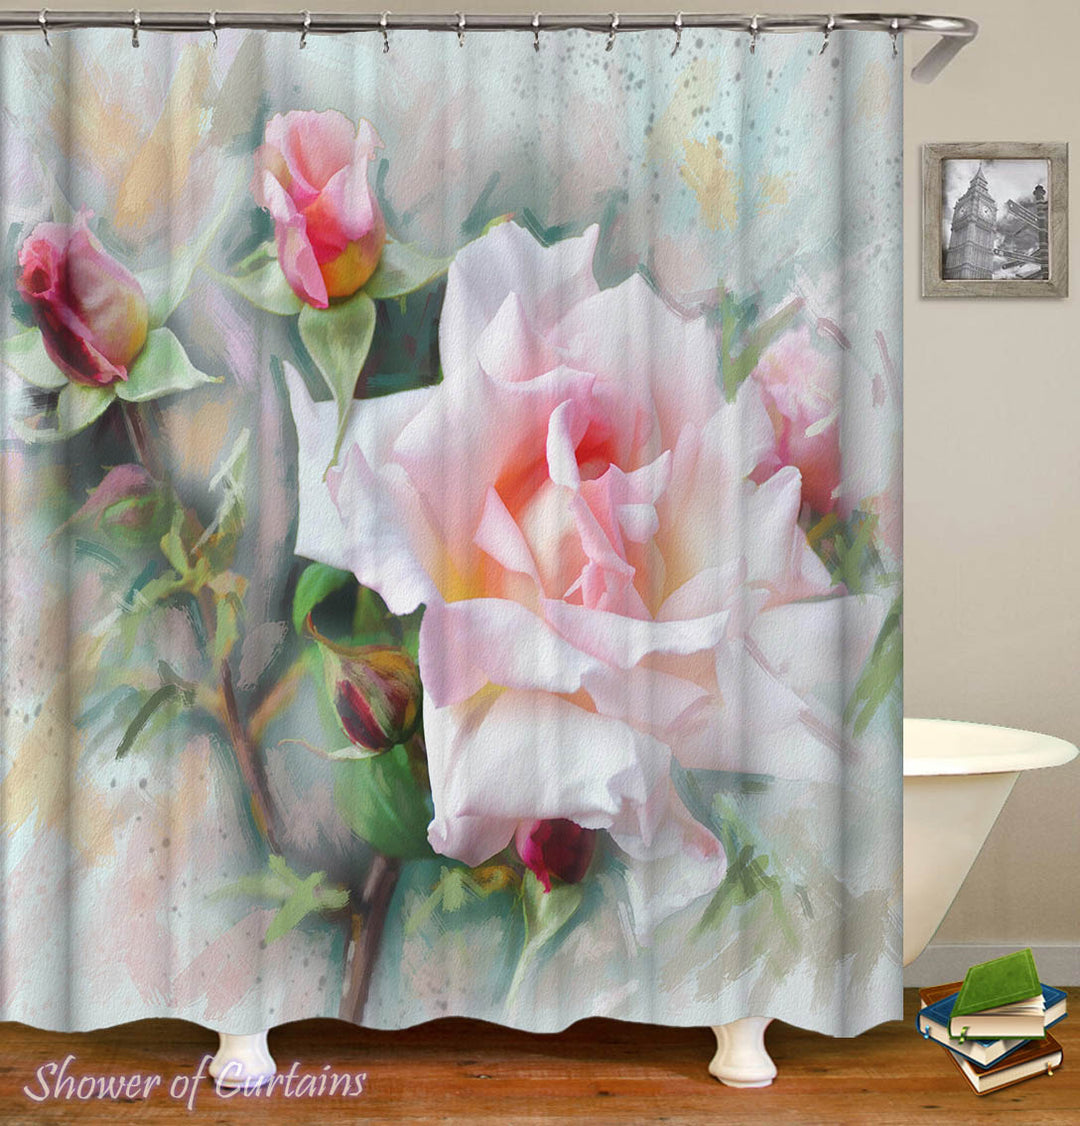 White Flower Shower Curtain - Pinkish White Roses Painting